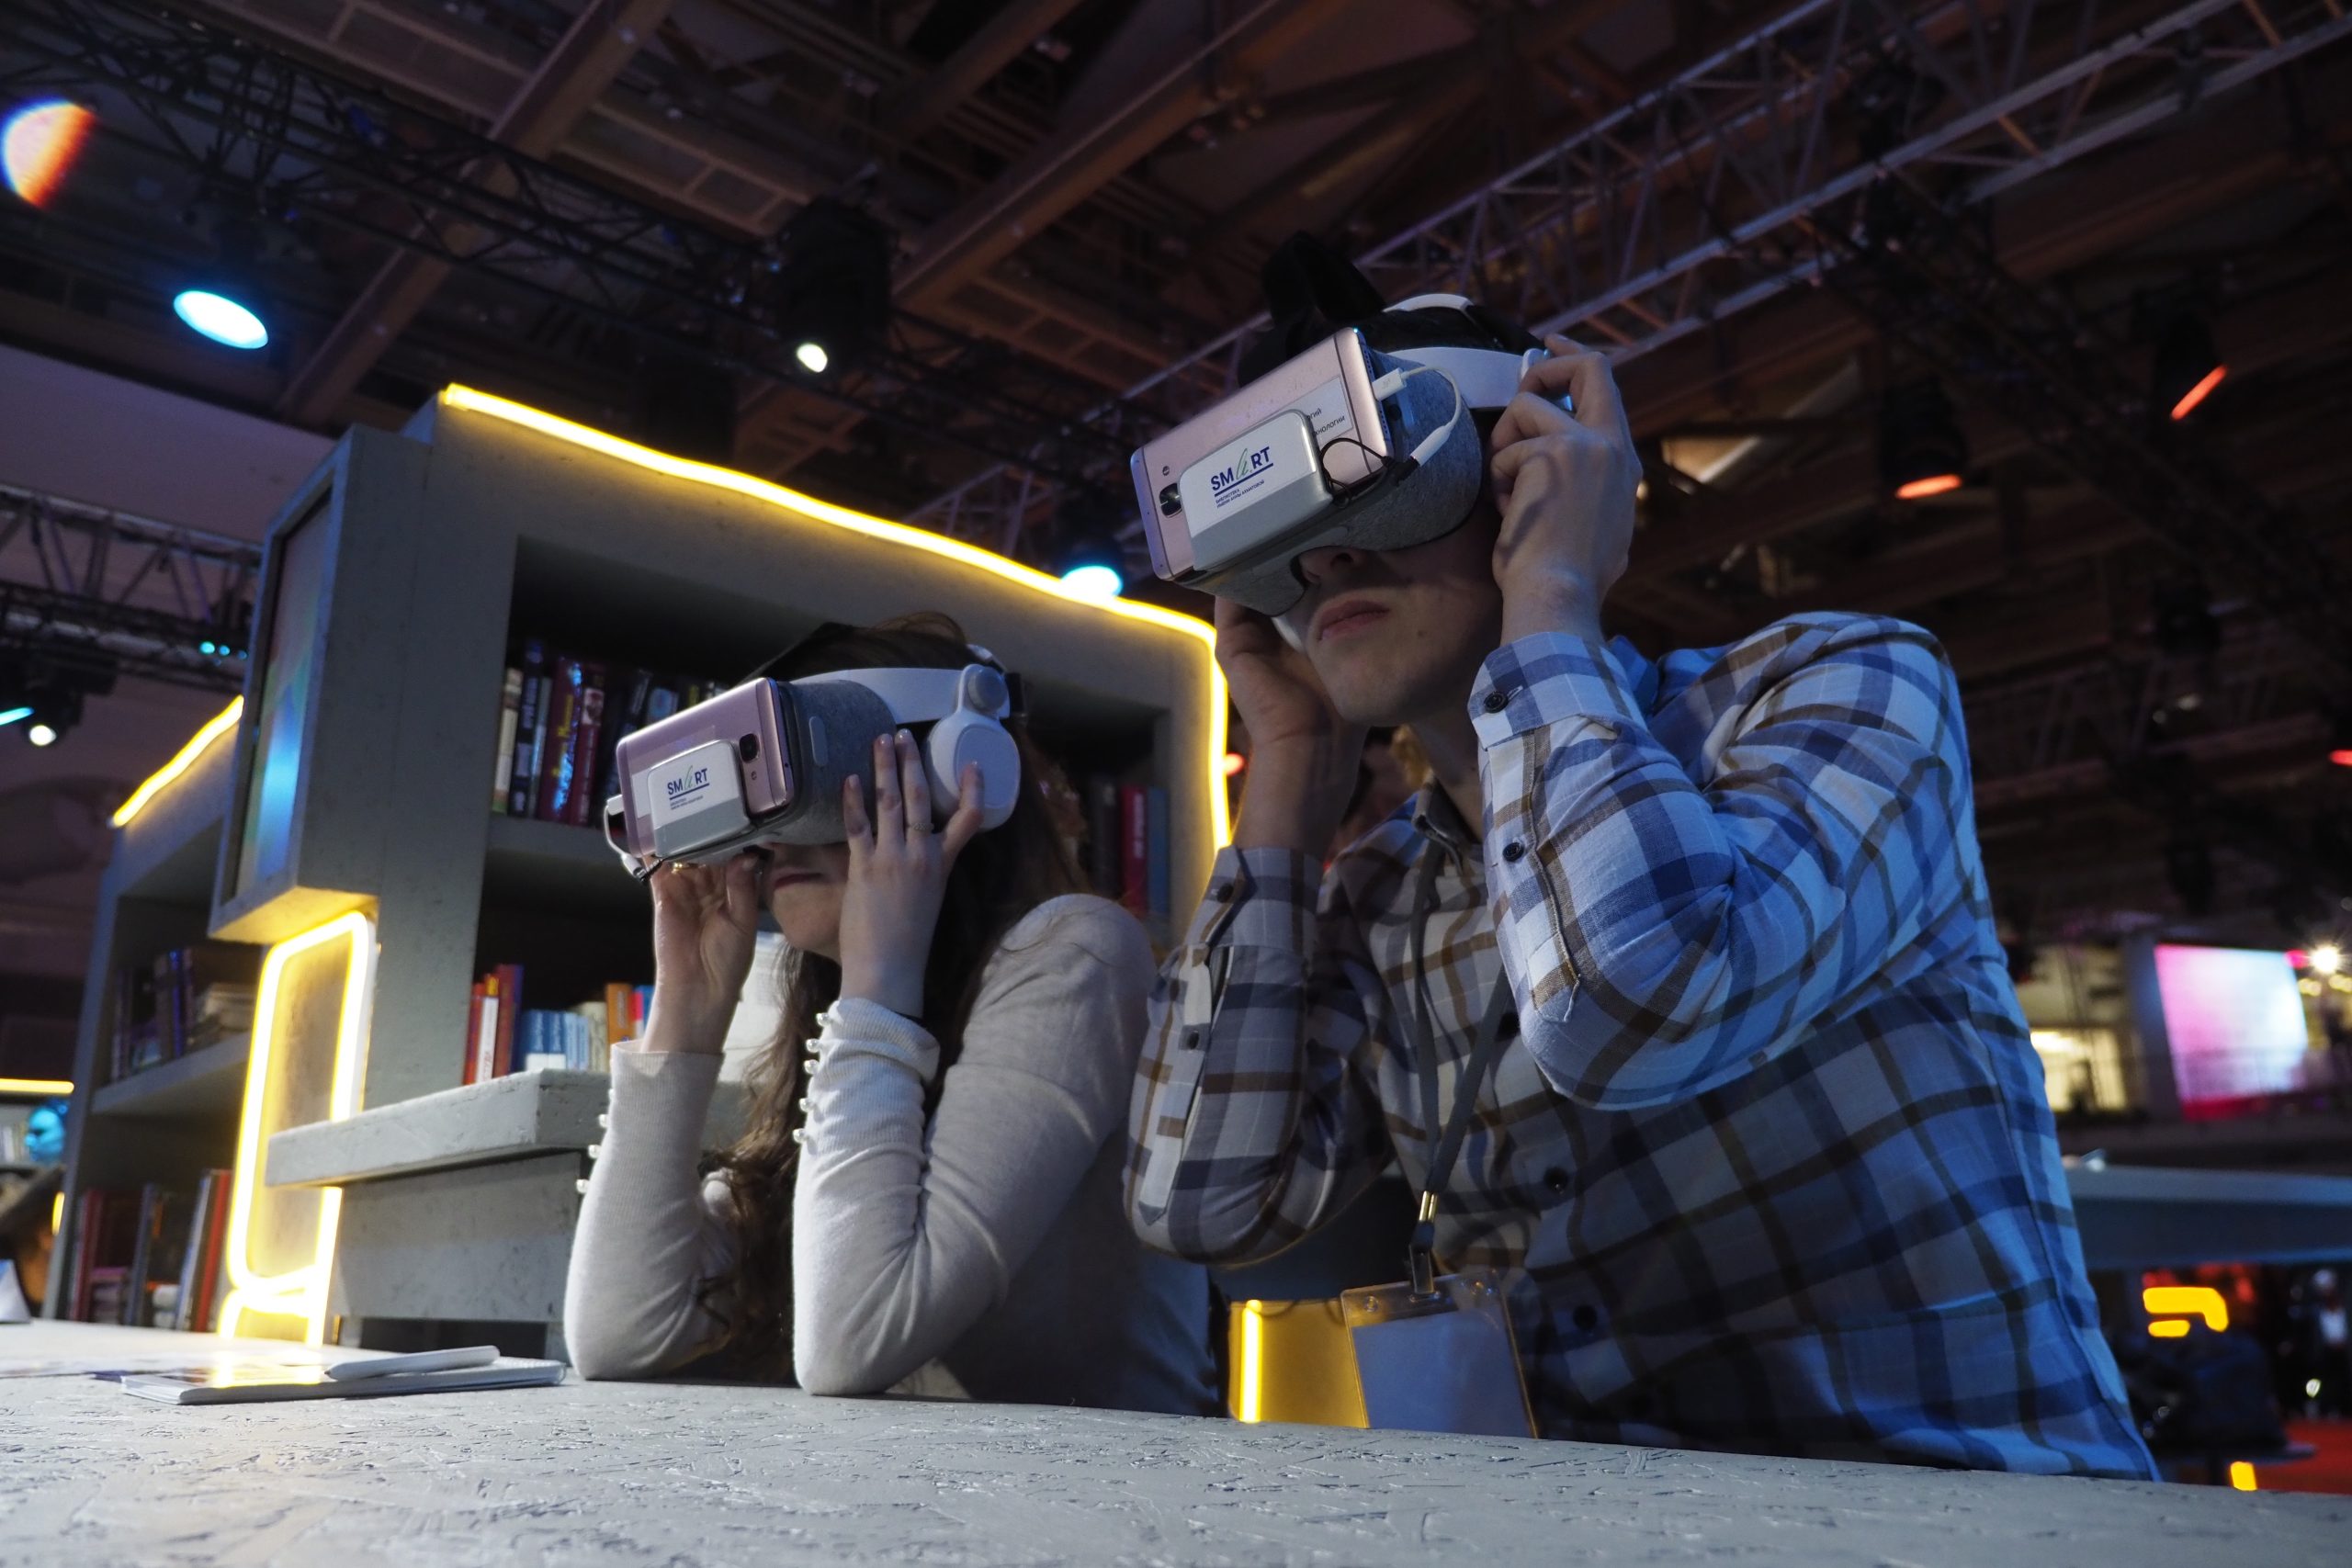 Галерея «Пересветов переулок» создаст VR мультфильм